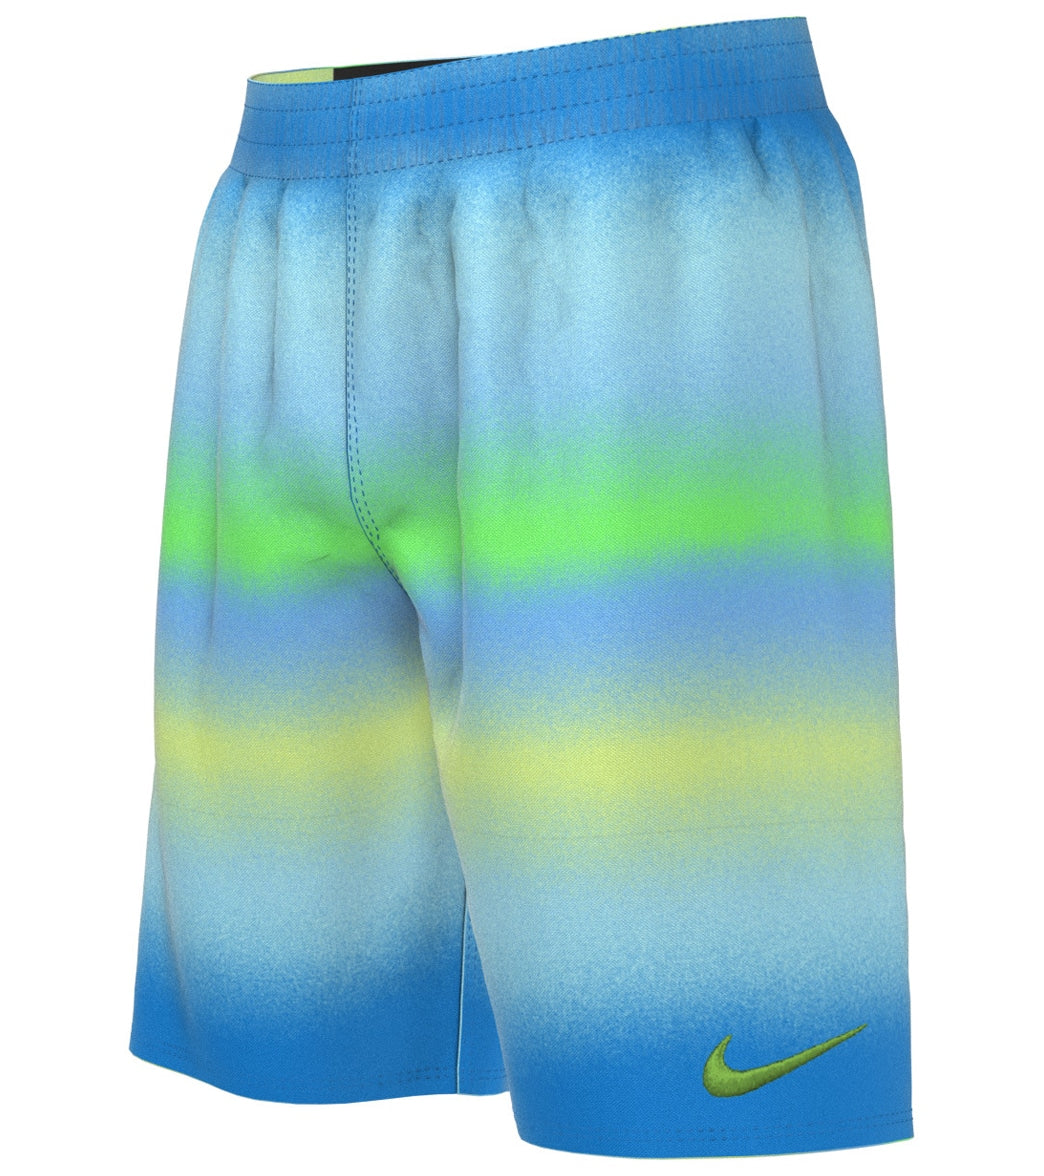 Nike Boys Horizon Stripe Swim Trunks (Big Kid)